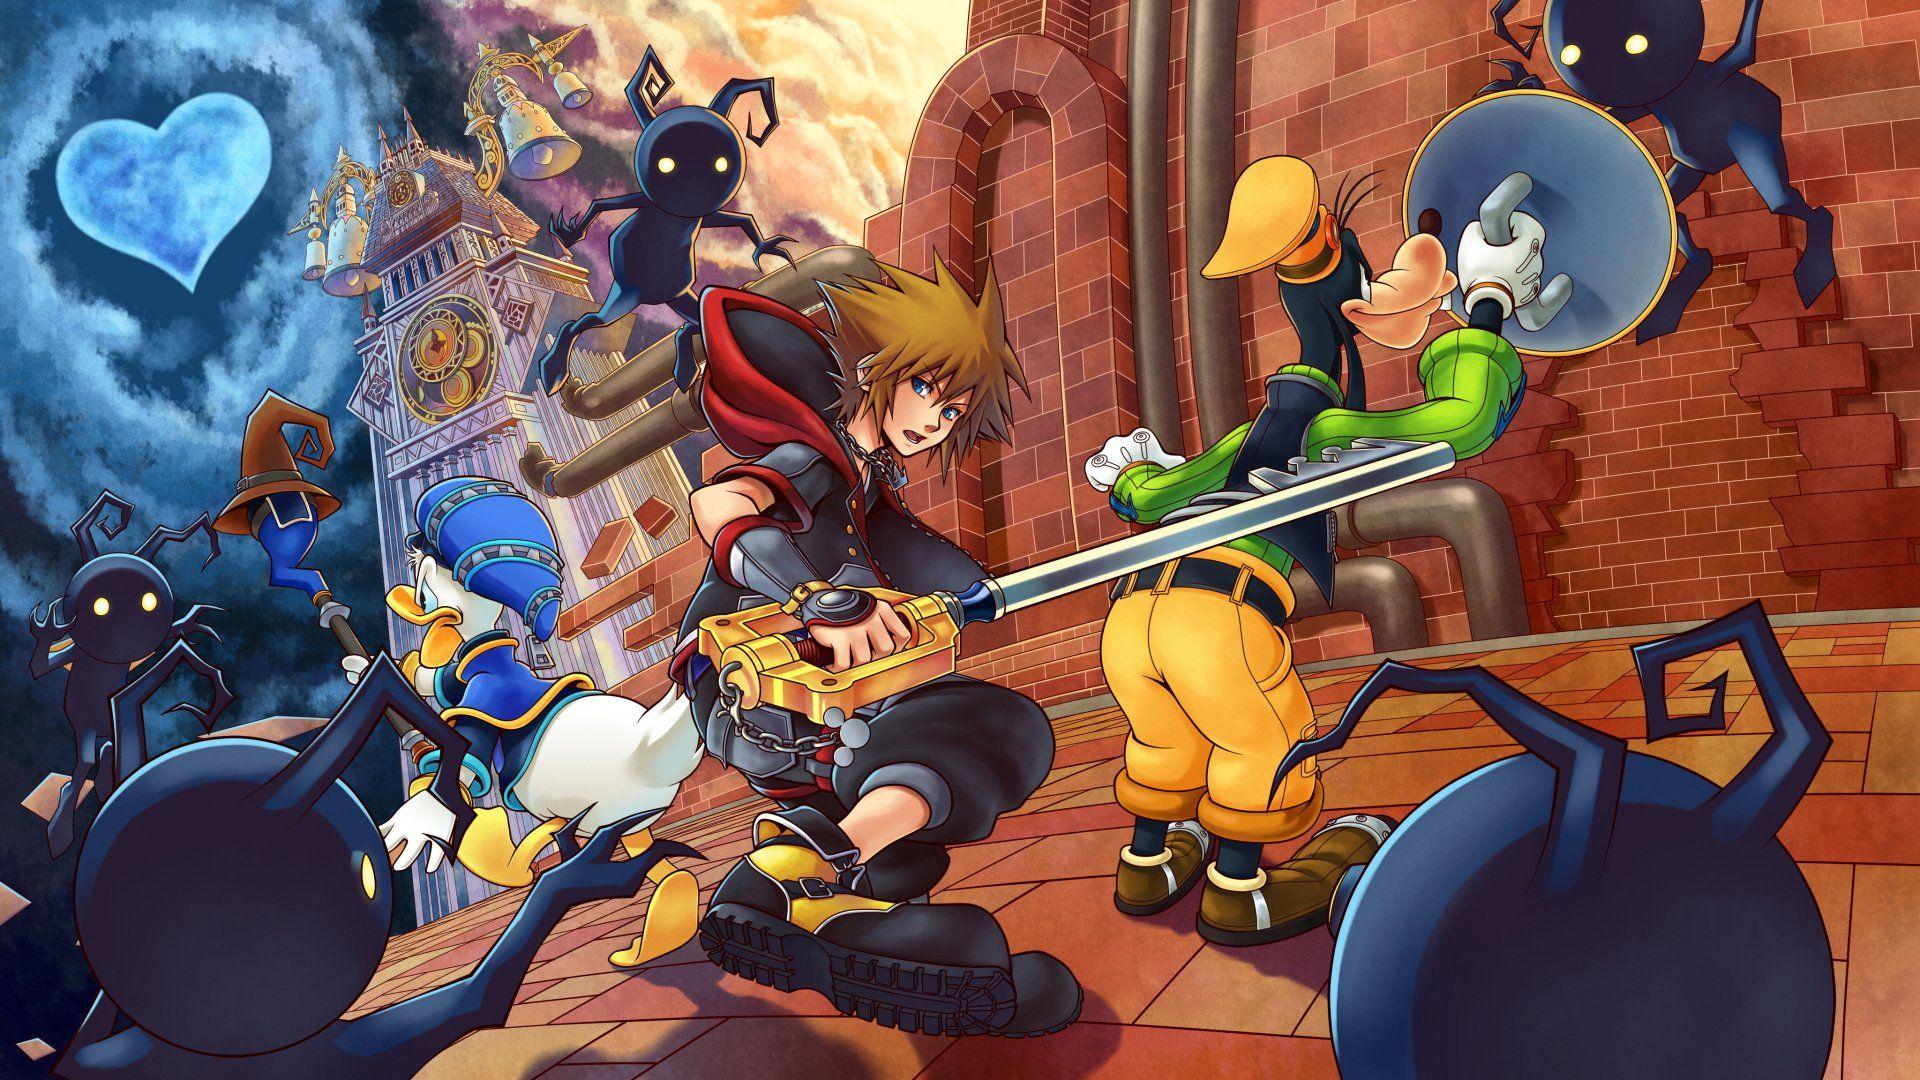 Kingdom Hearts 3 HD Wallpaper. Playstation, Xbox and PC games